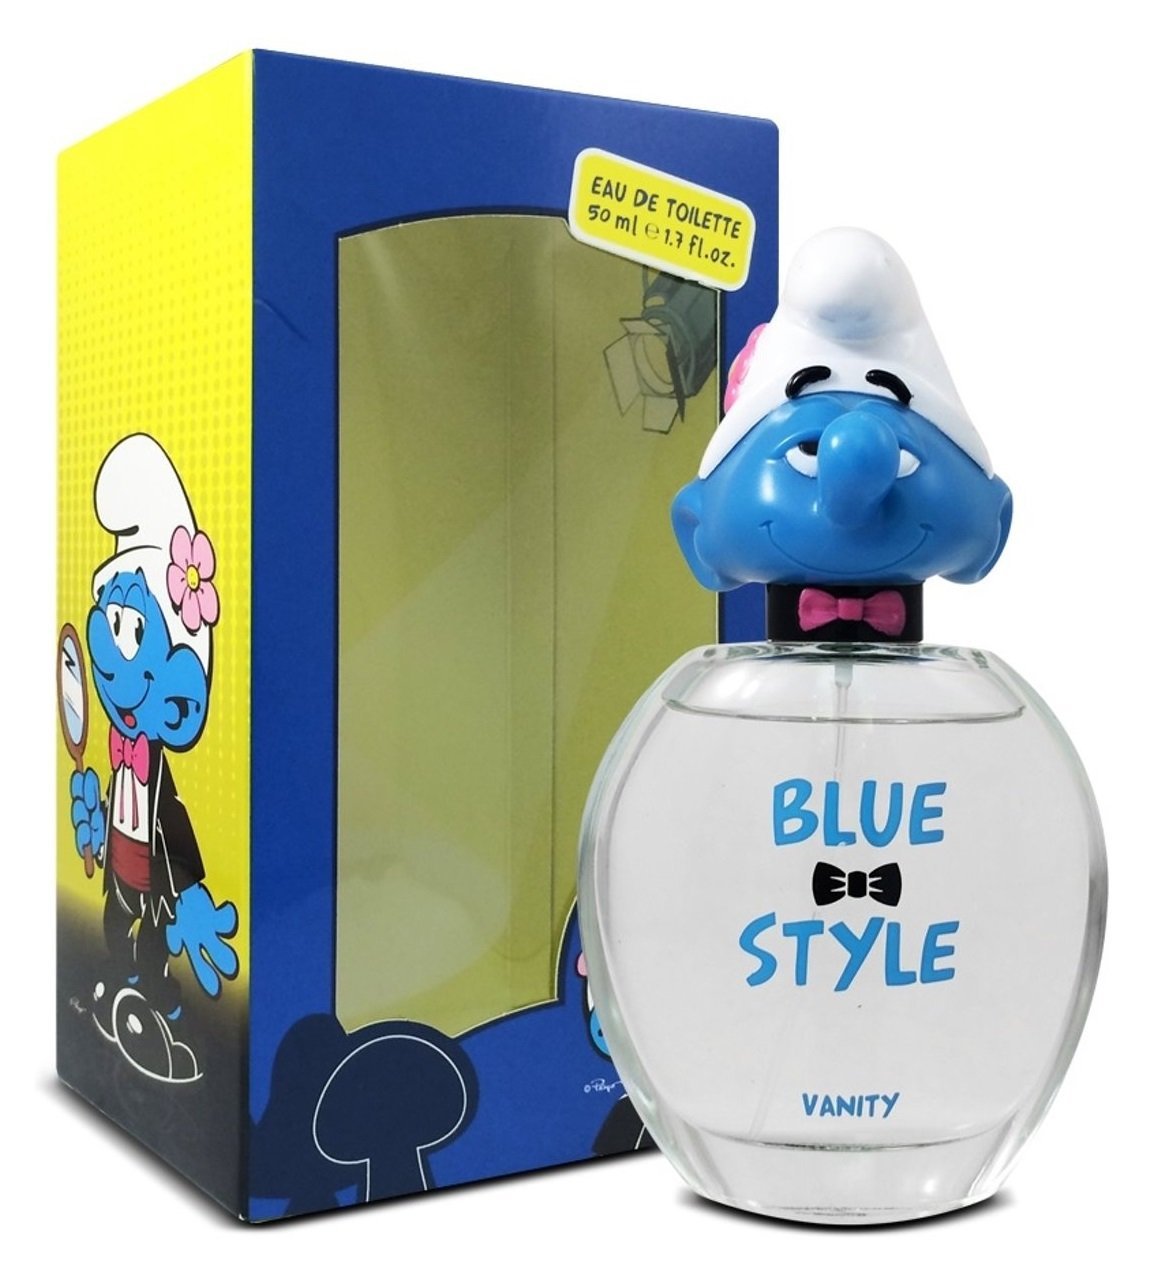 Smurfs Vanity by Smurfs | FragranceBaba.com